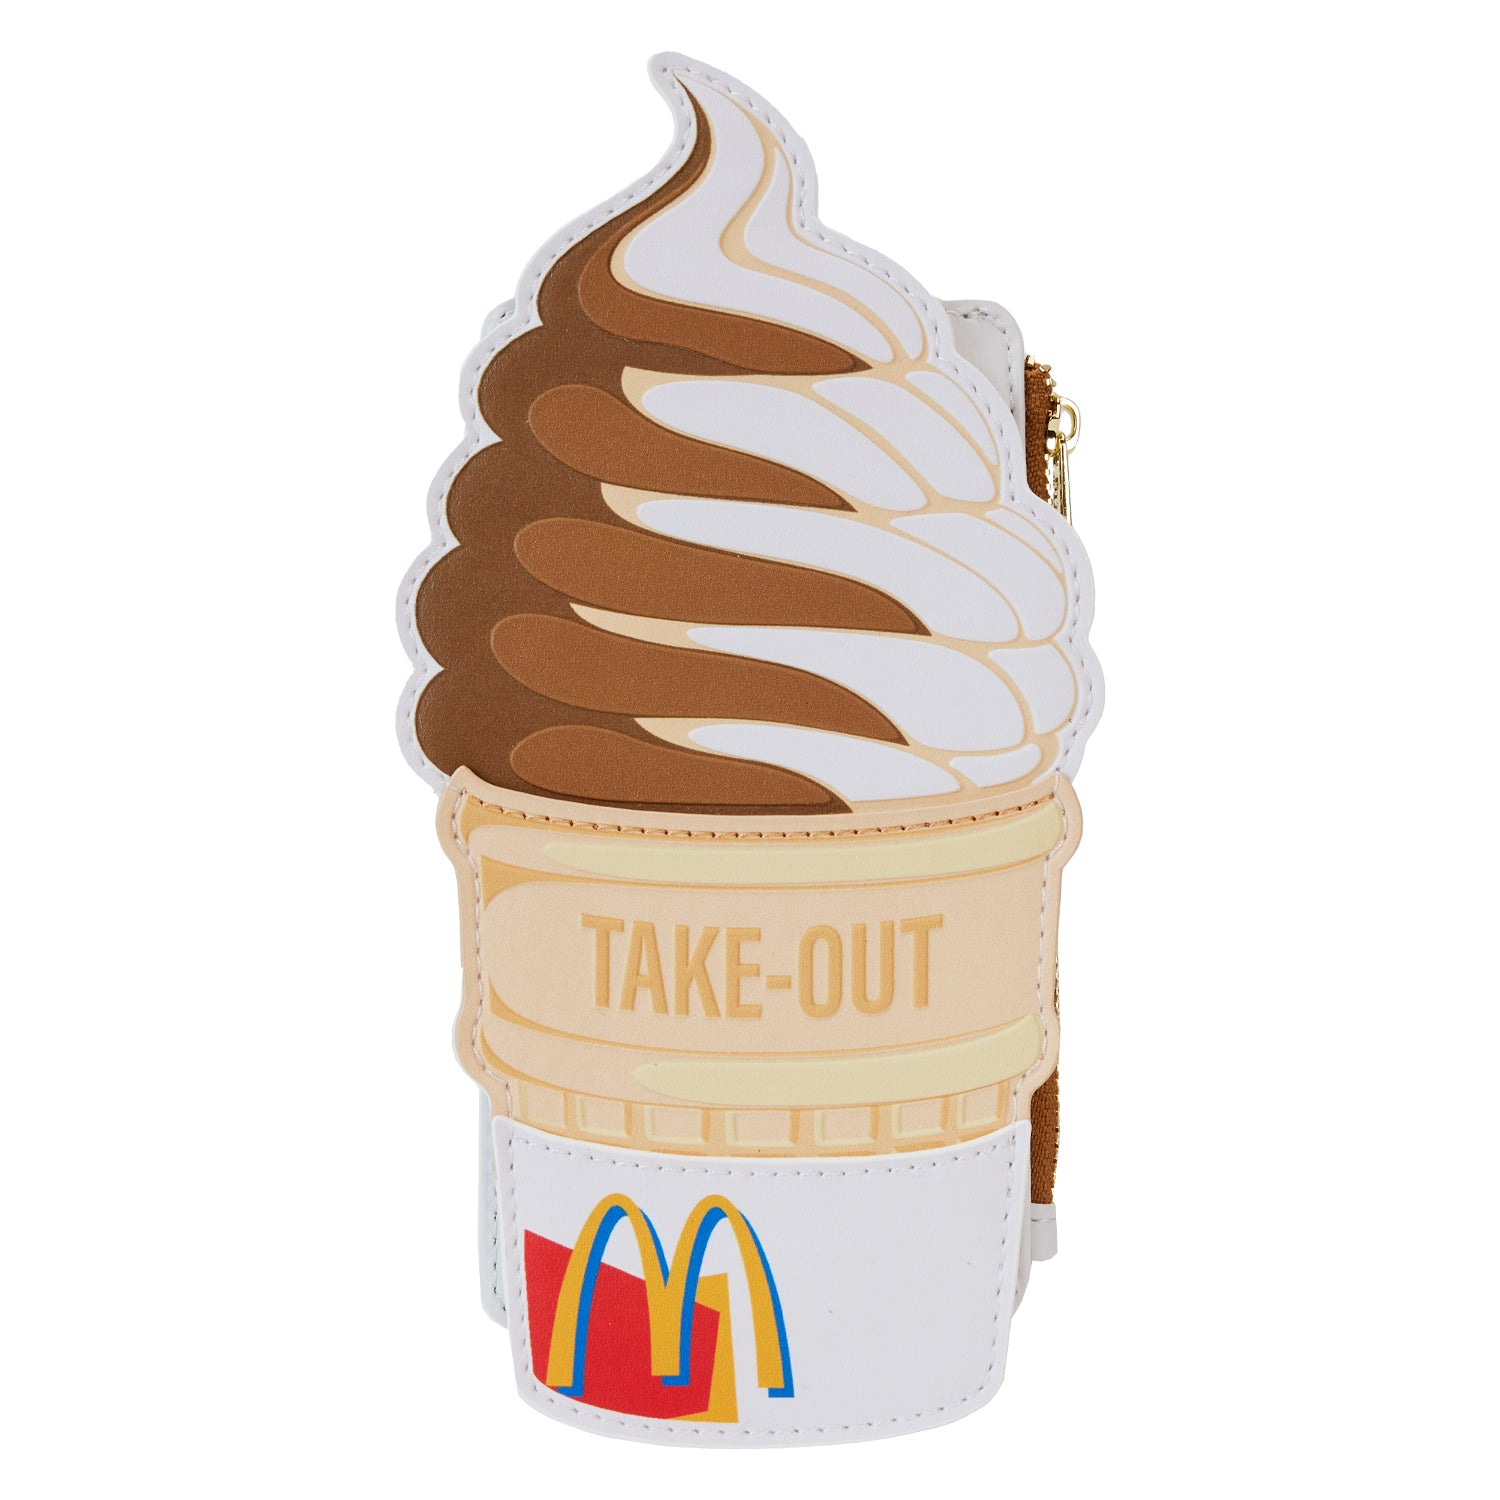 Loungefly McDonald's Soft Serve Ice Cream Cone Cardholder